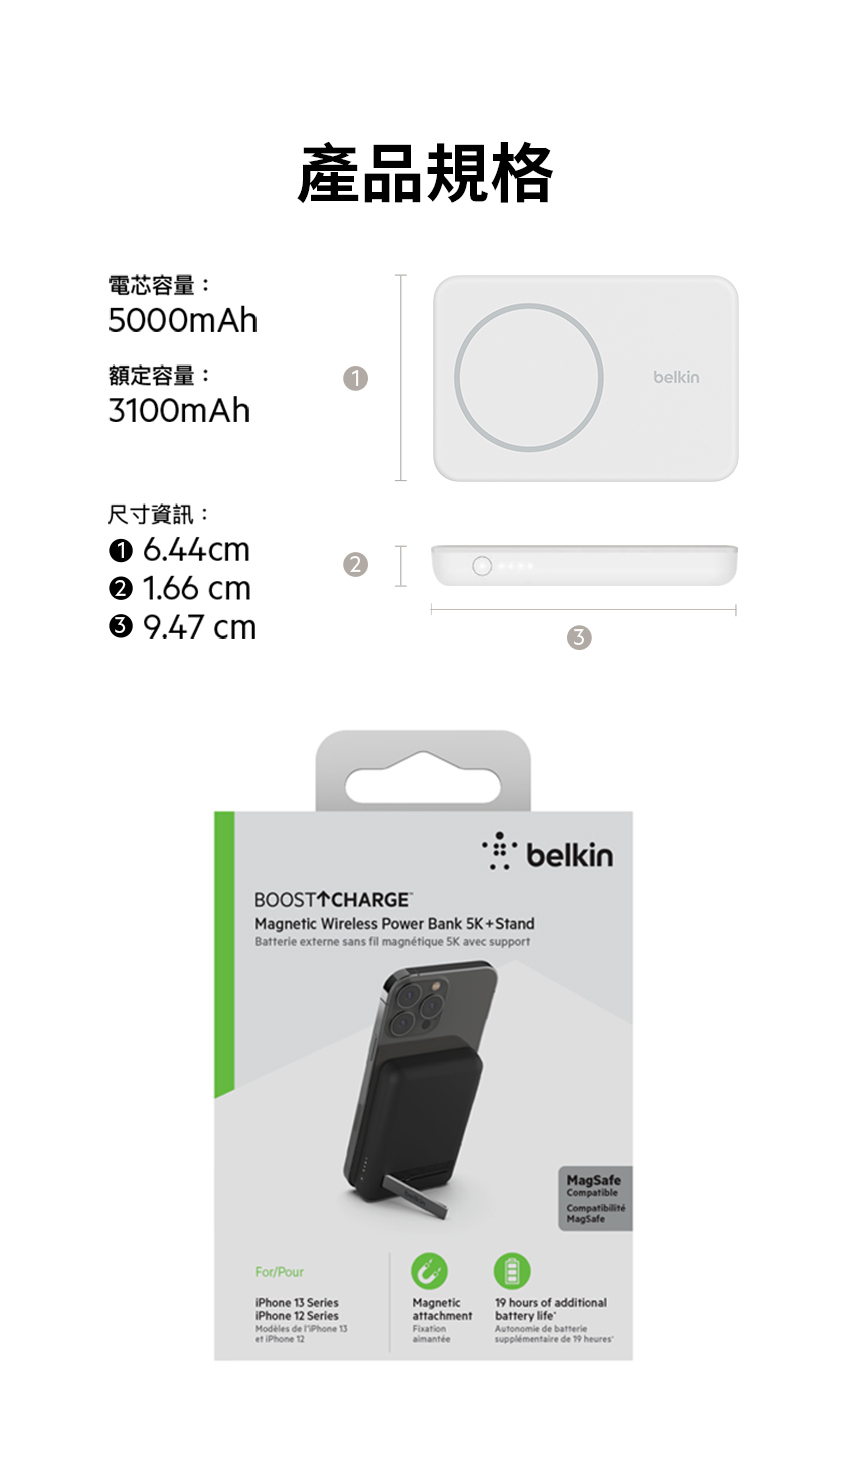 Belkin  BoostCharge Magnetic Wireless Power Bank 5K + Stand